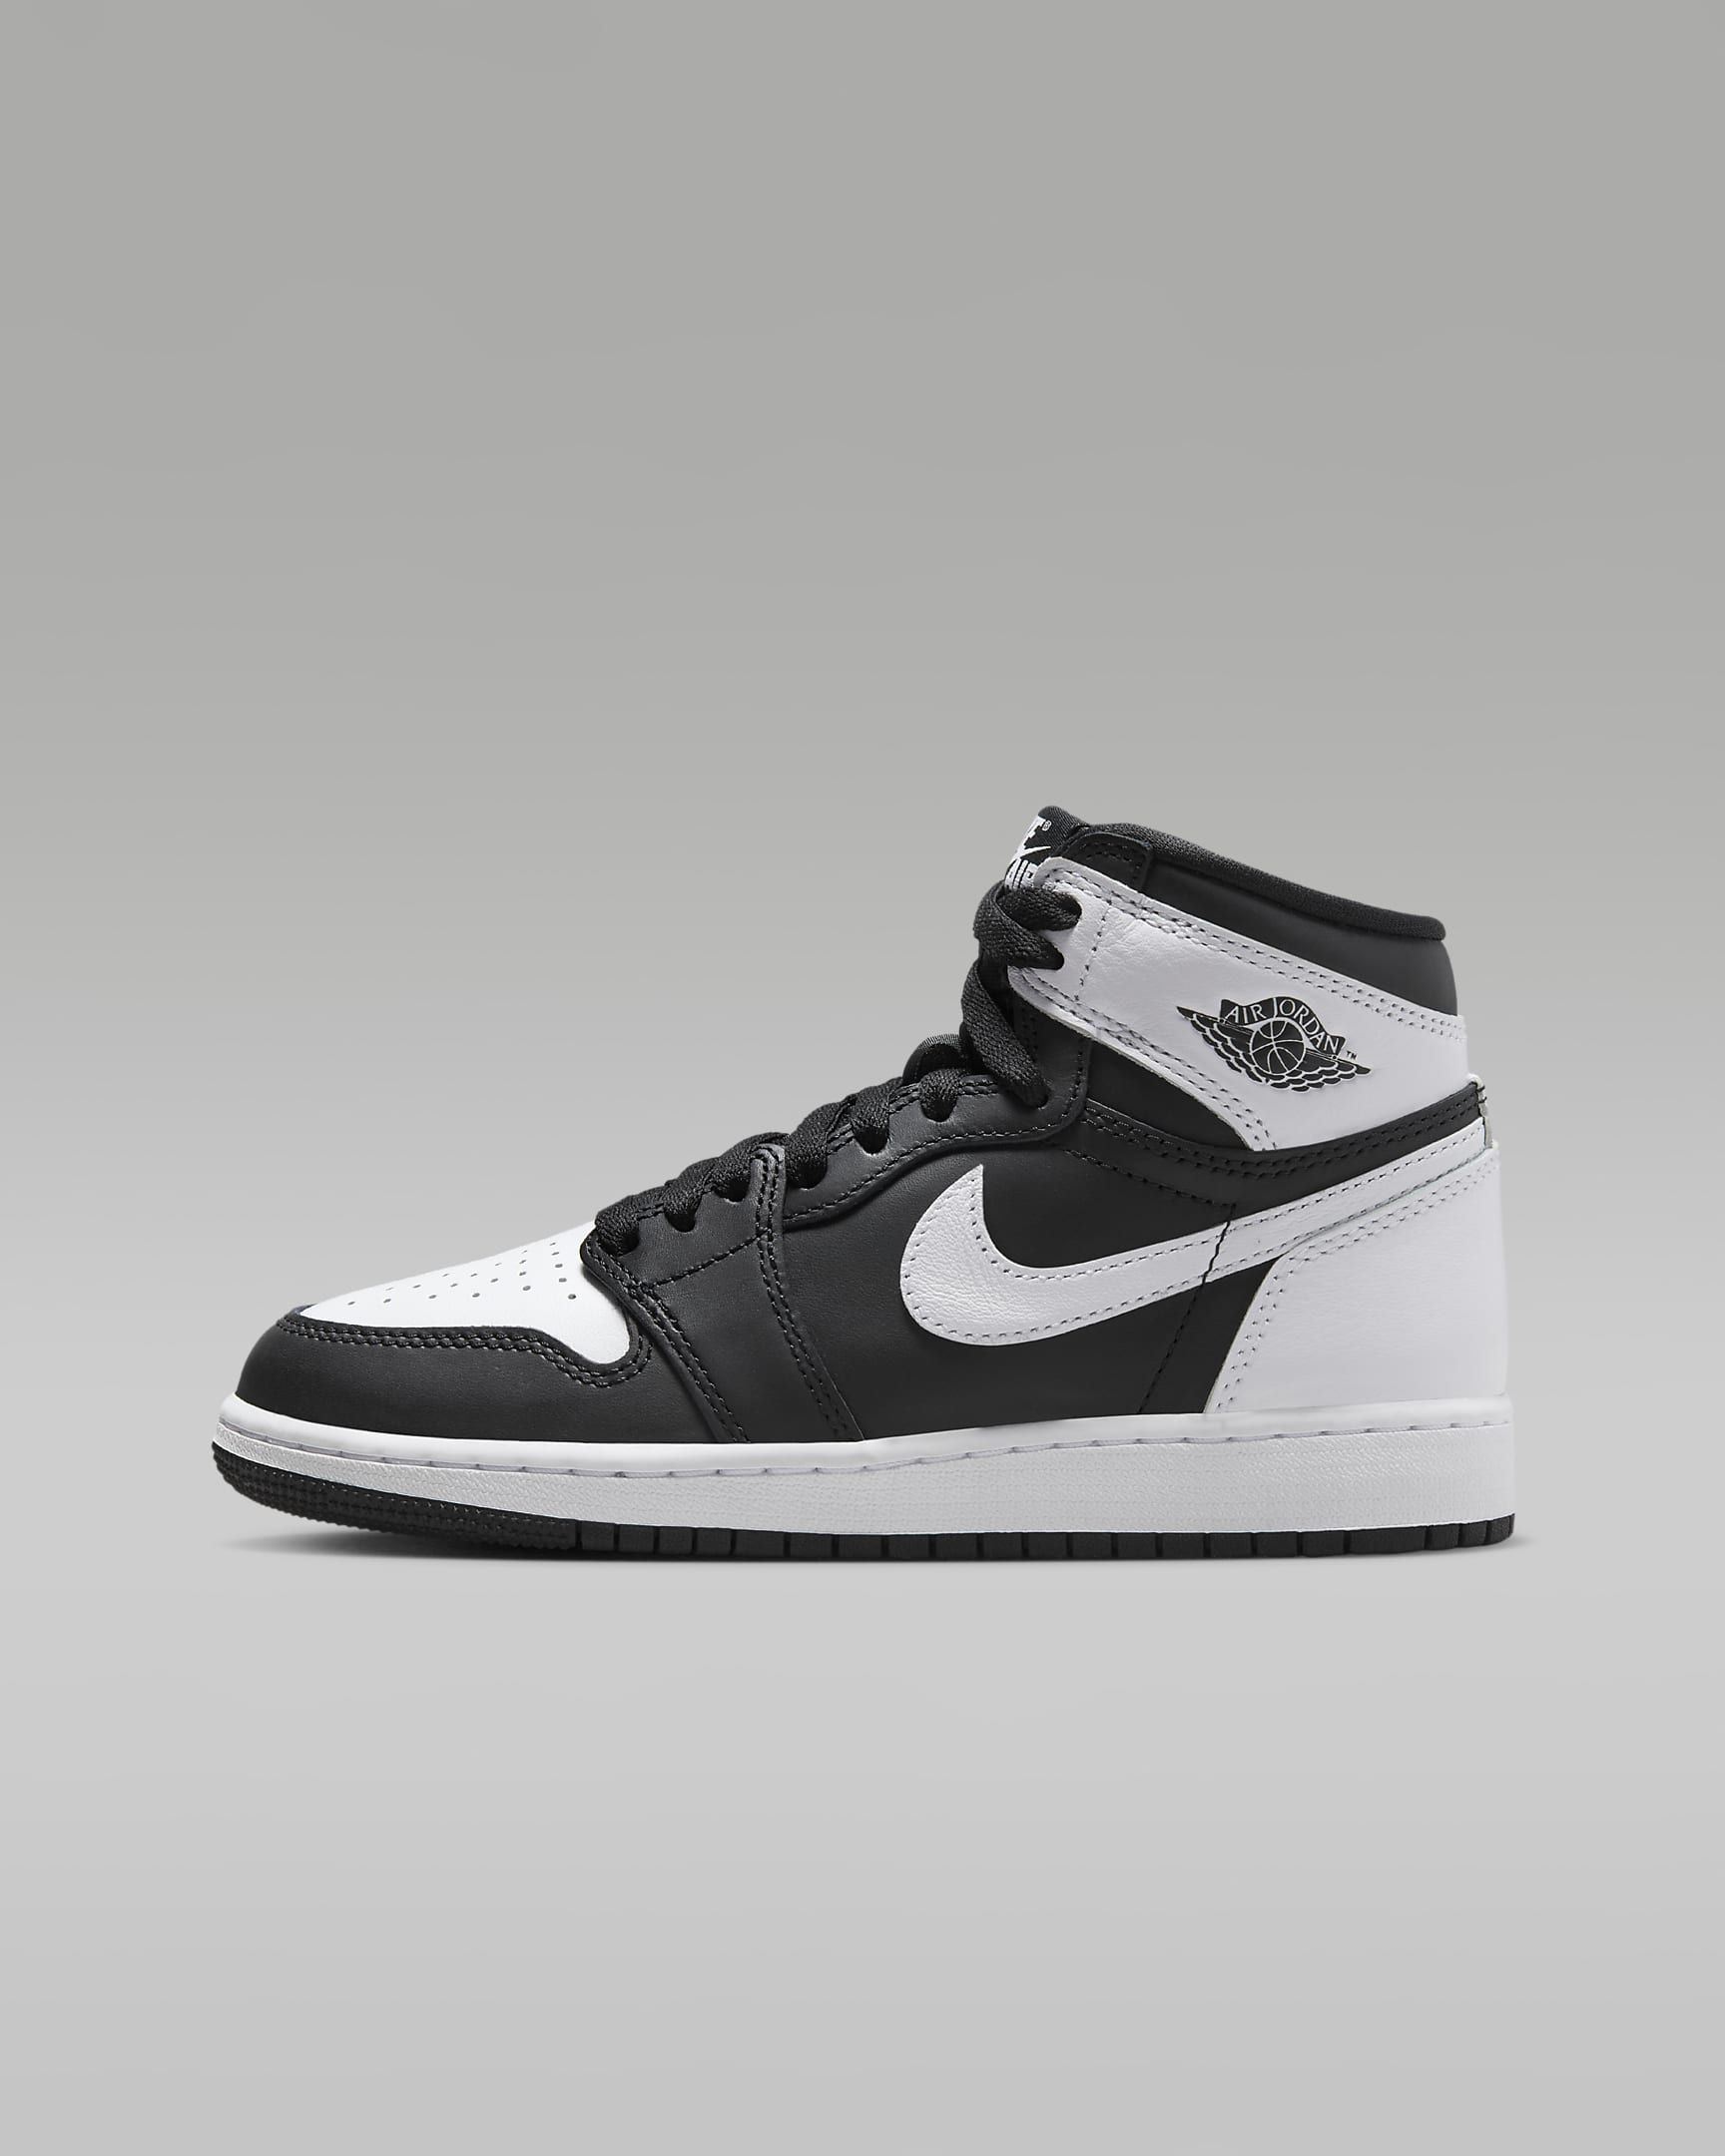 Air Jordan 1 High OG "Black & White" Big Kids' Shoes. Nike.com | Nike (US)